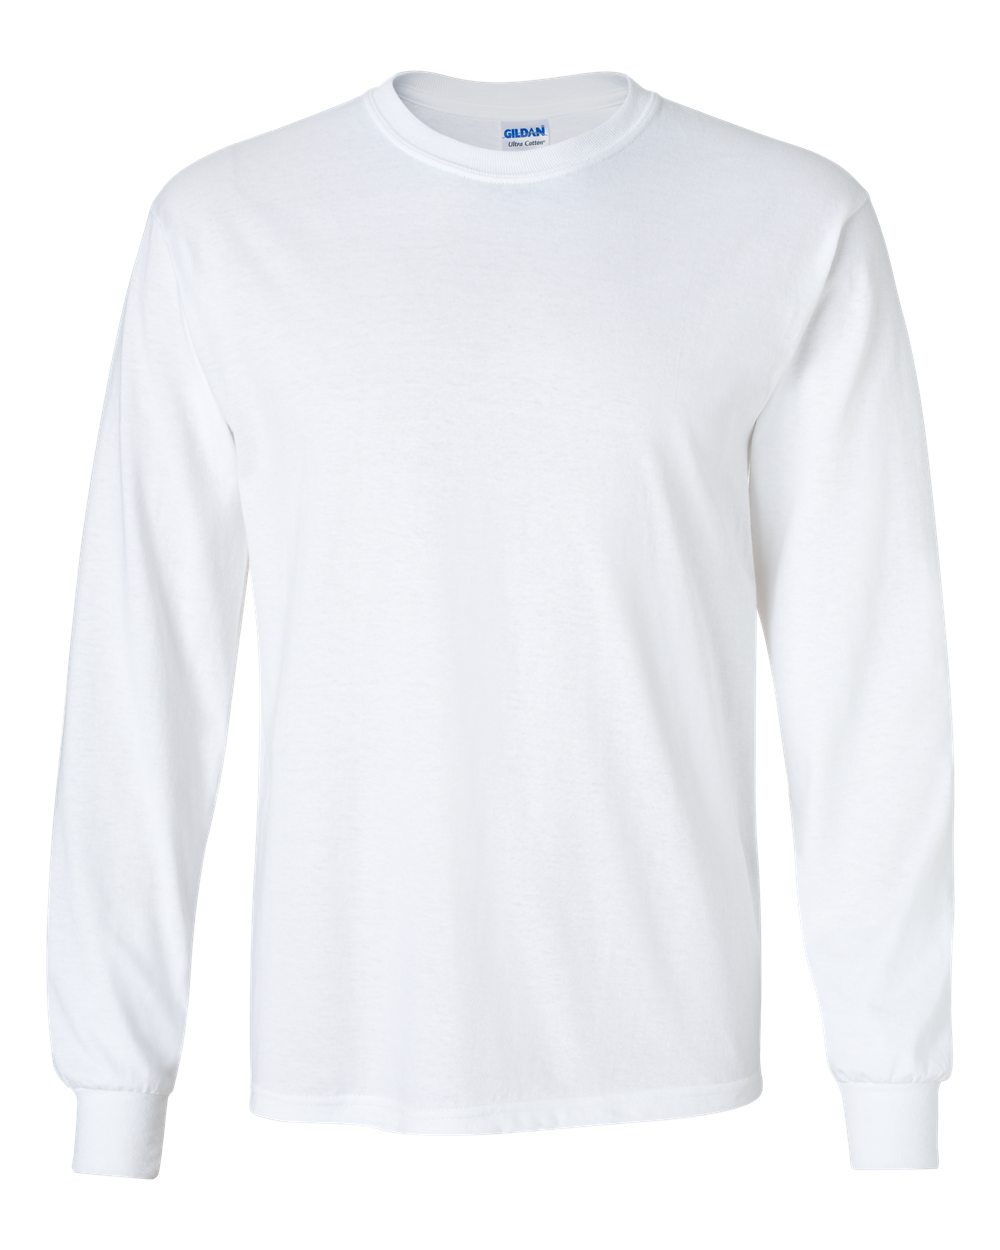 GildanGildan Men's Ultra Cotton Jersey Long Sleeve Tee, Marque  